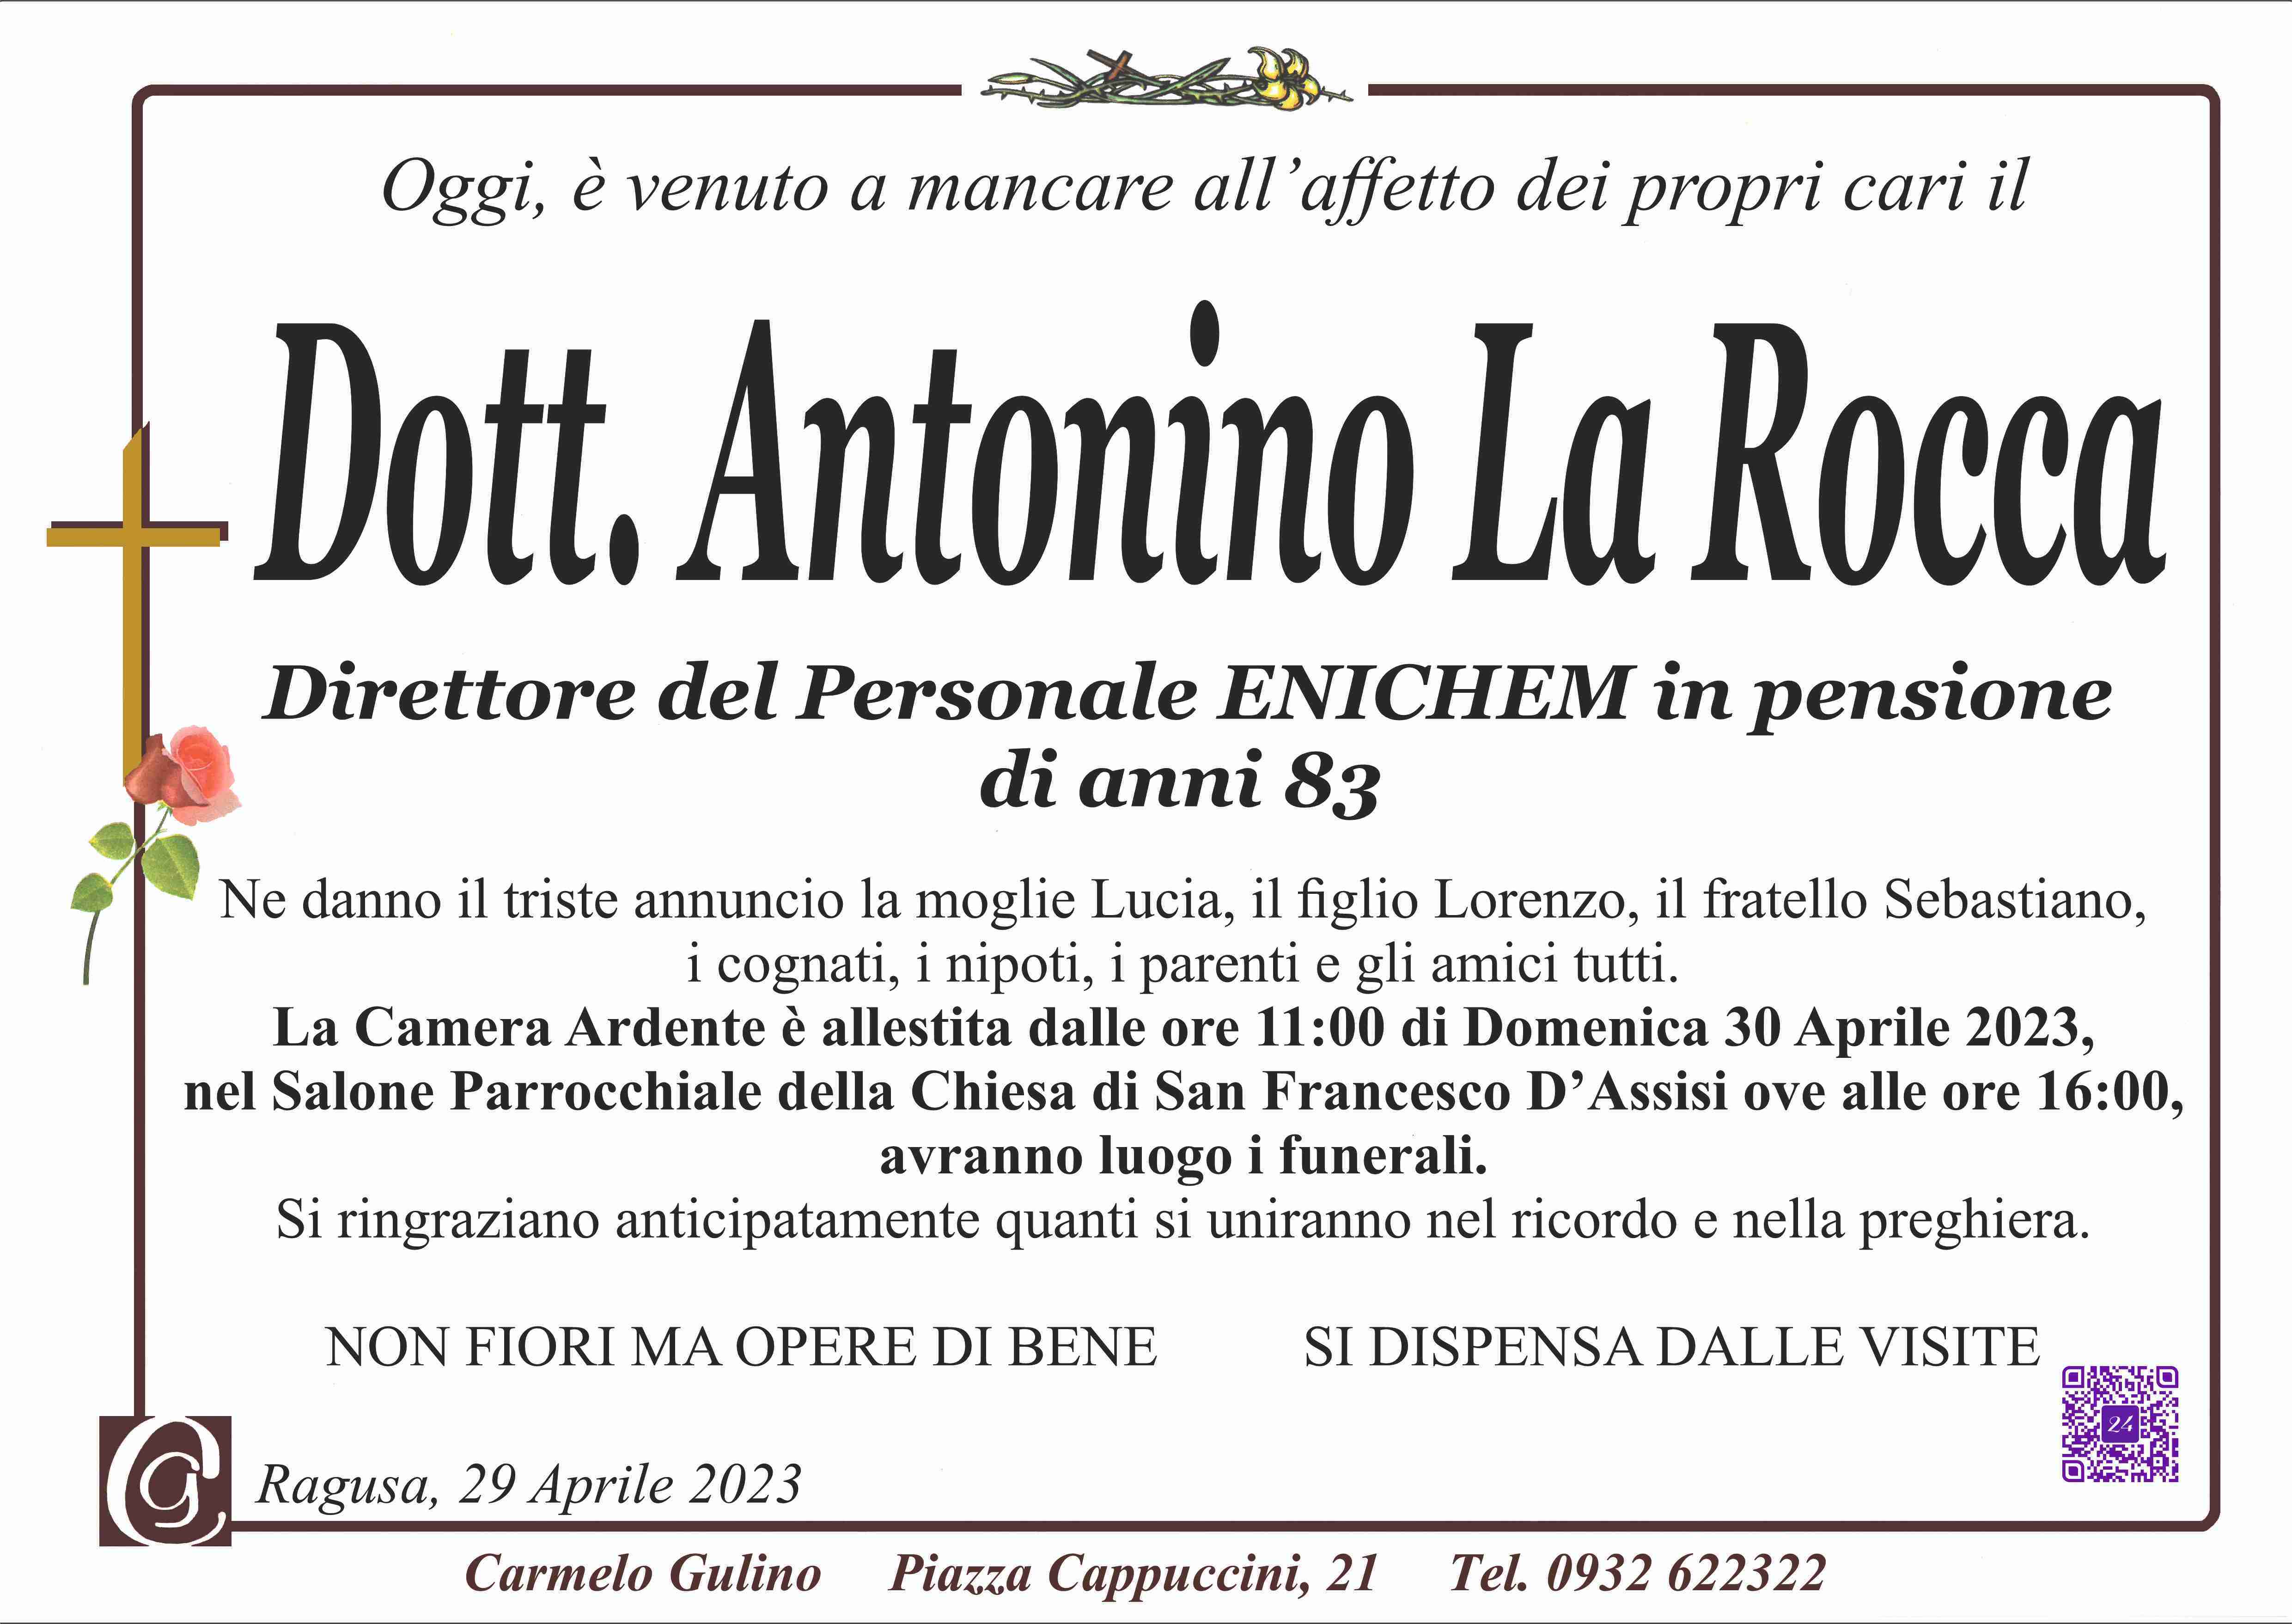 Antonino La Rocca